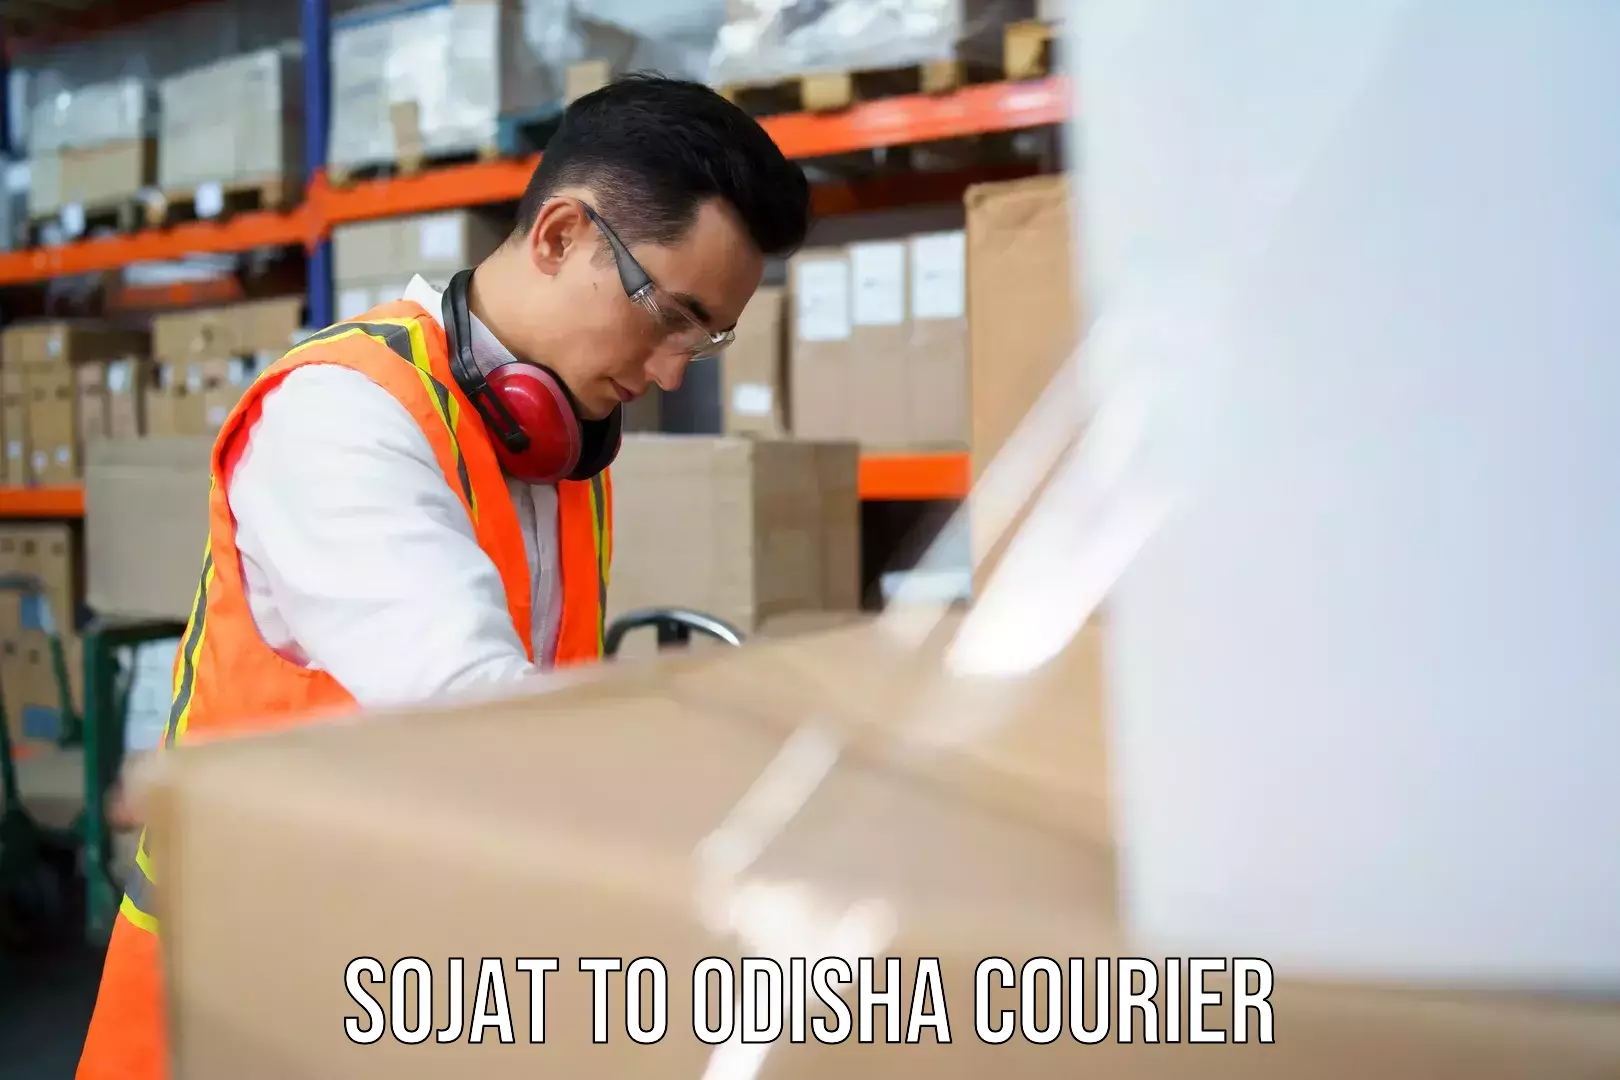 Business shipping needs Sojat to Odisha